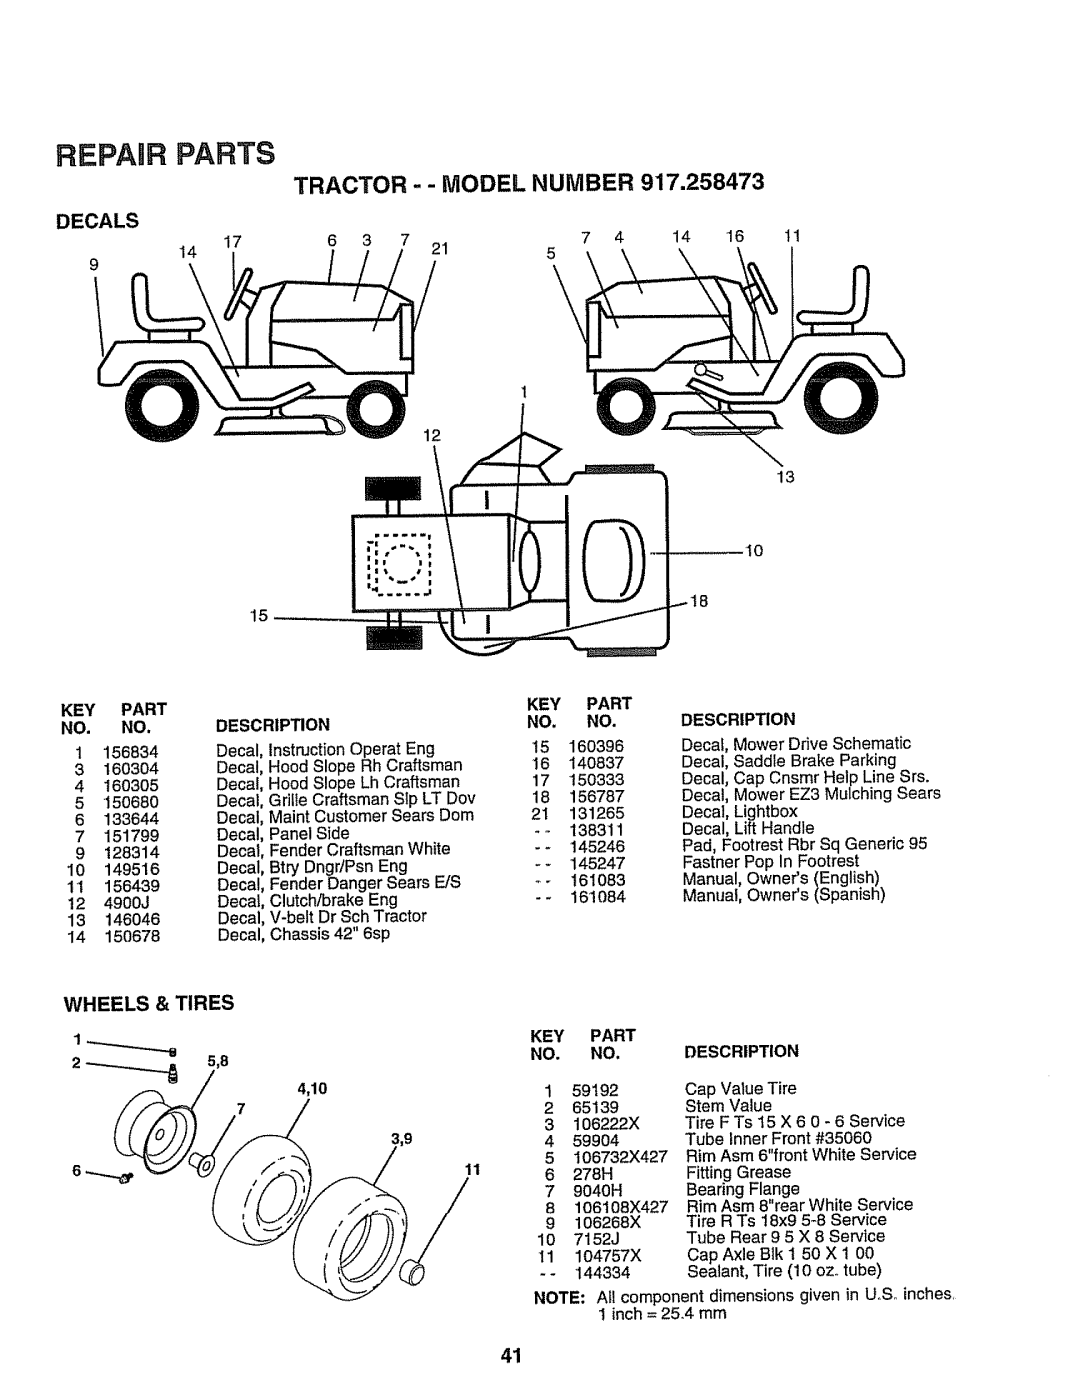 Sears 917.258473 owner manual Repair, Parts, DECALS 9, Tractor - - Model Number 